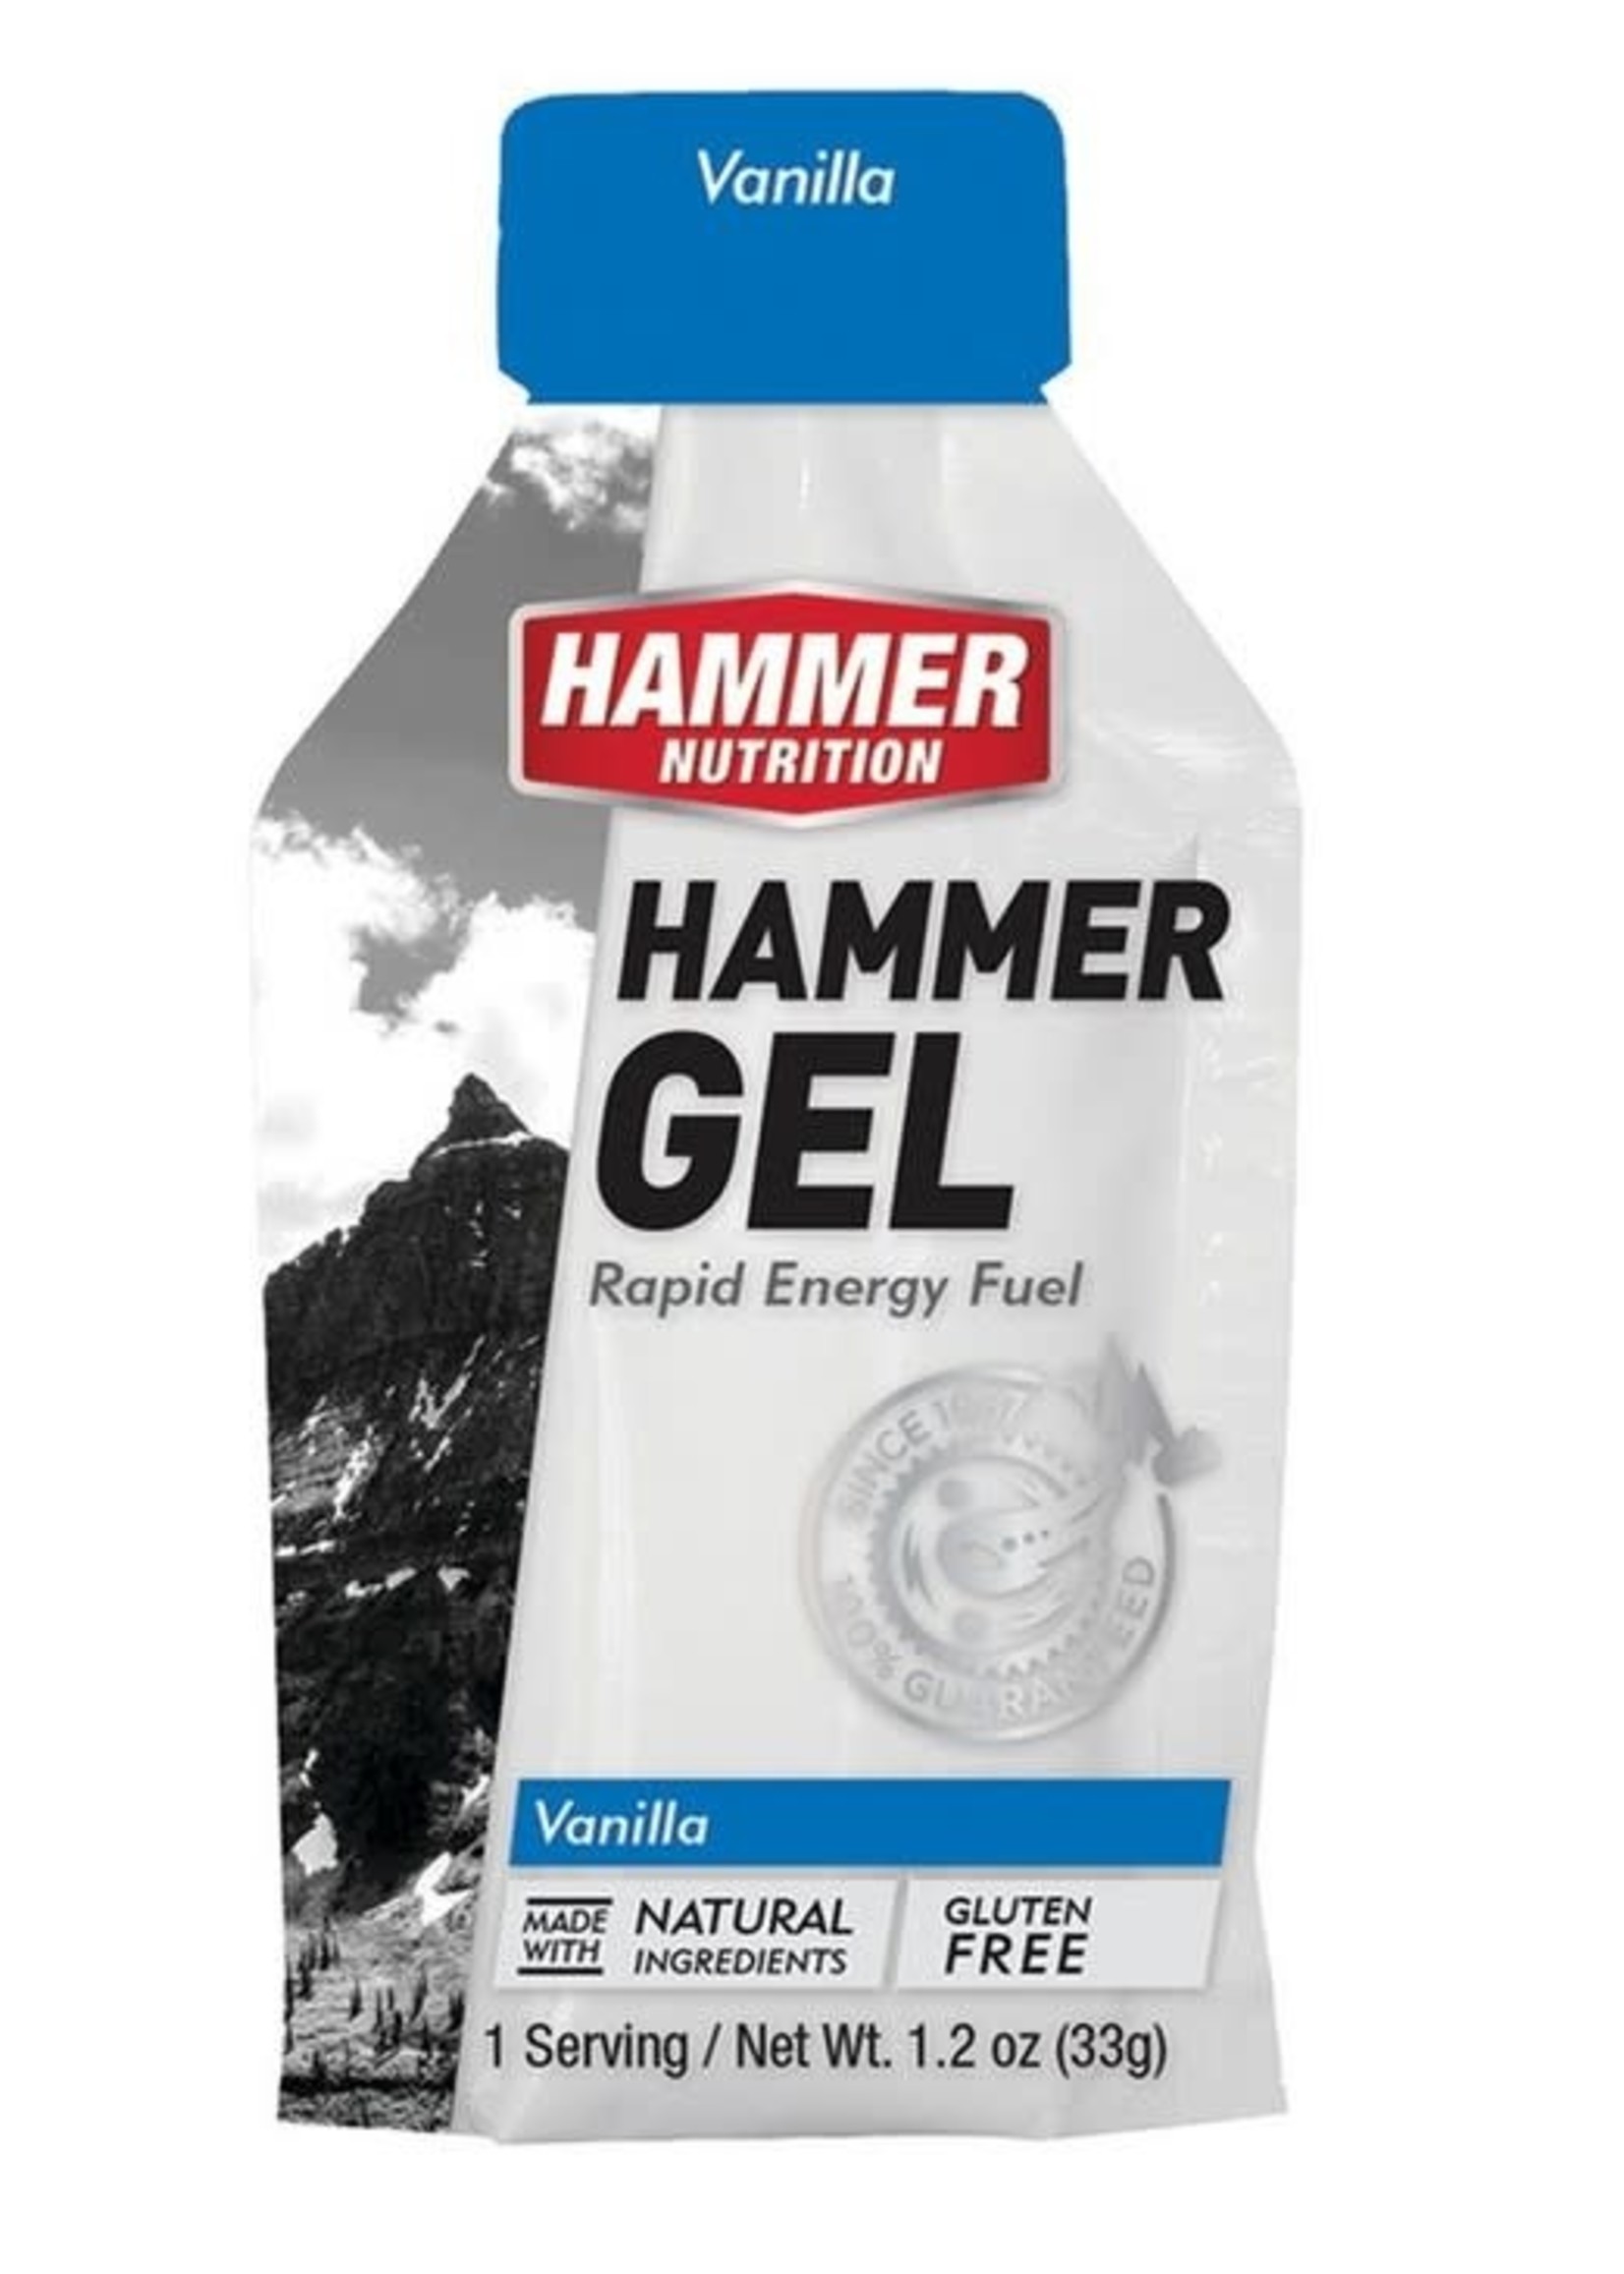 Hammer Nutrition Hammer Gel-Single Packs and 30 oz Bottles